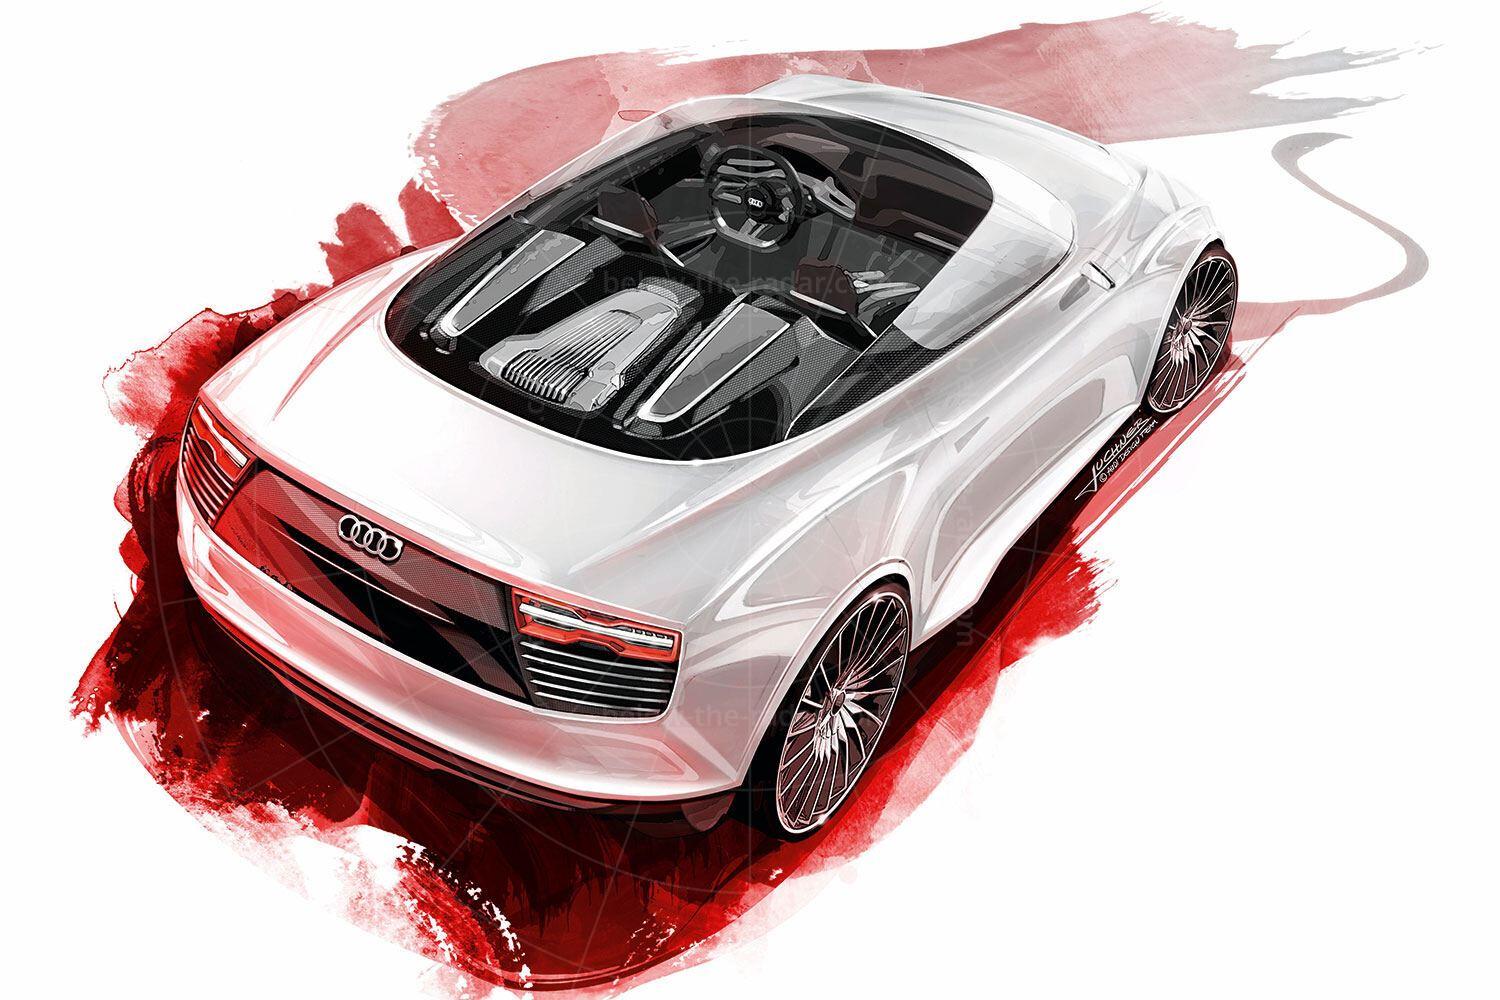 Audi e-tron Spyder design sketch Pic: Audi | Audi e-tron Spyder design sketch